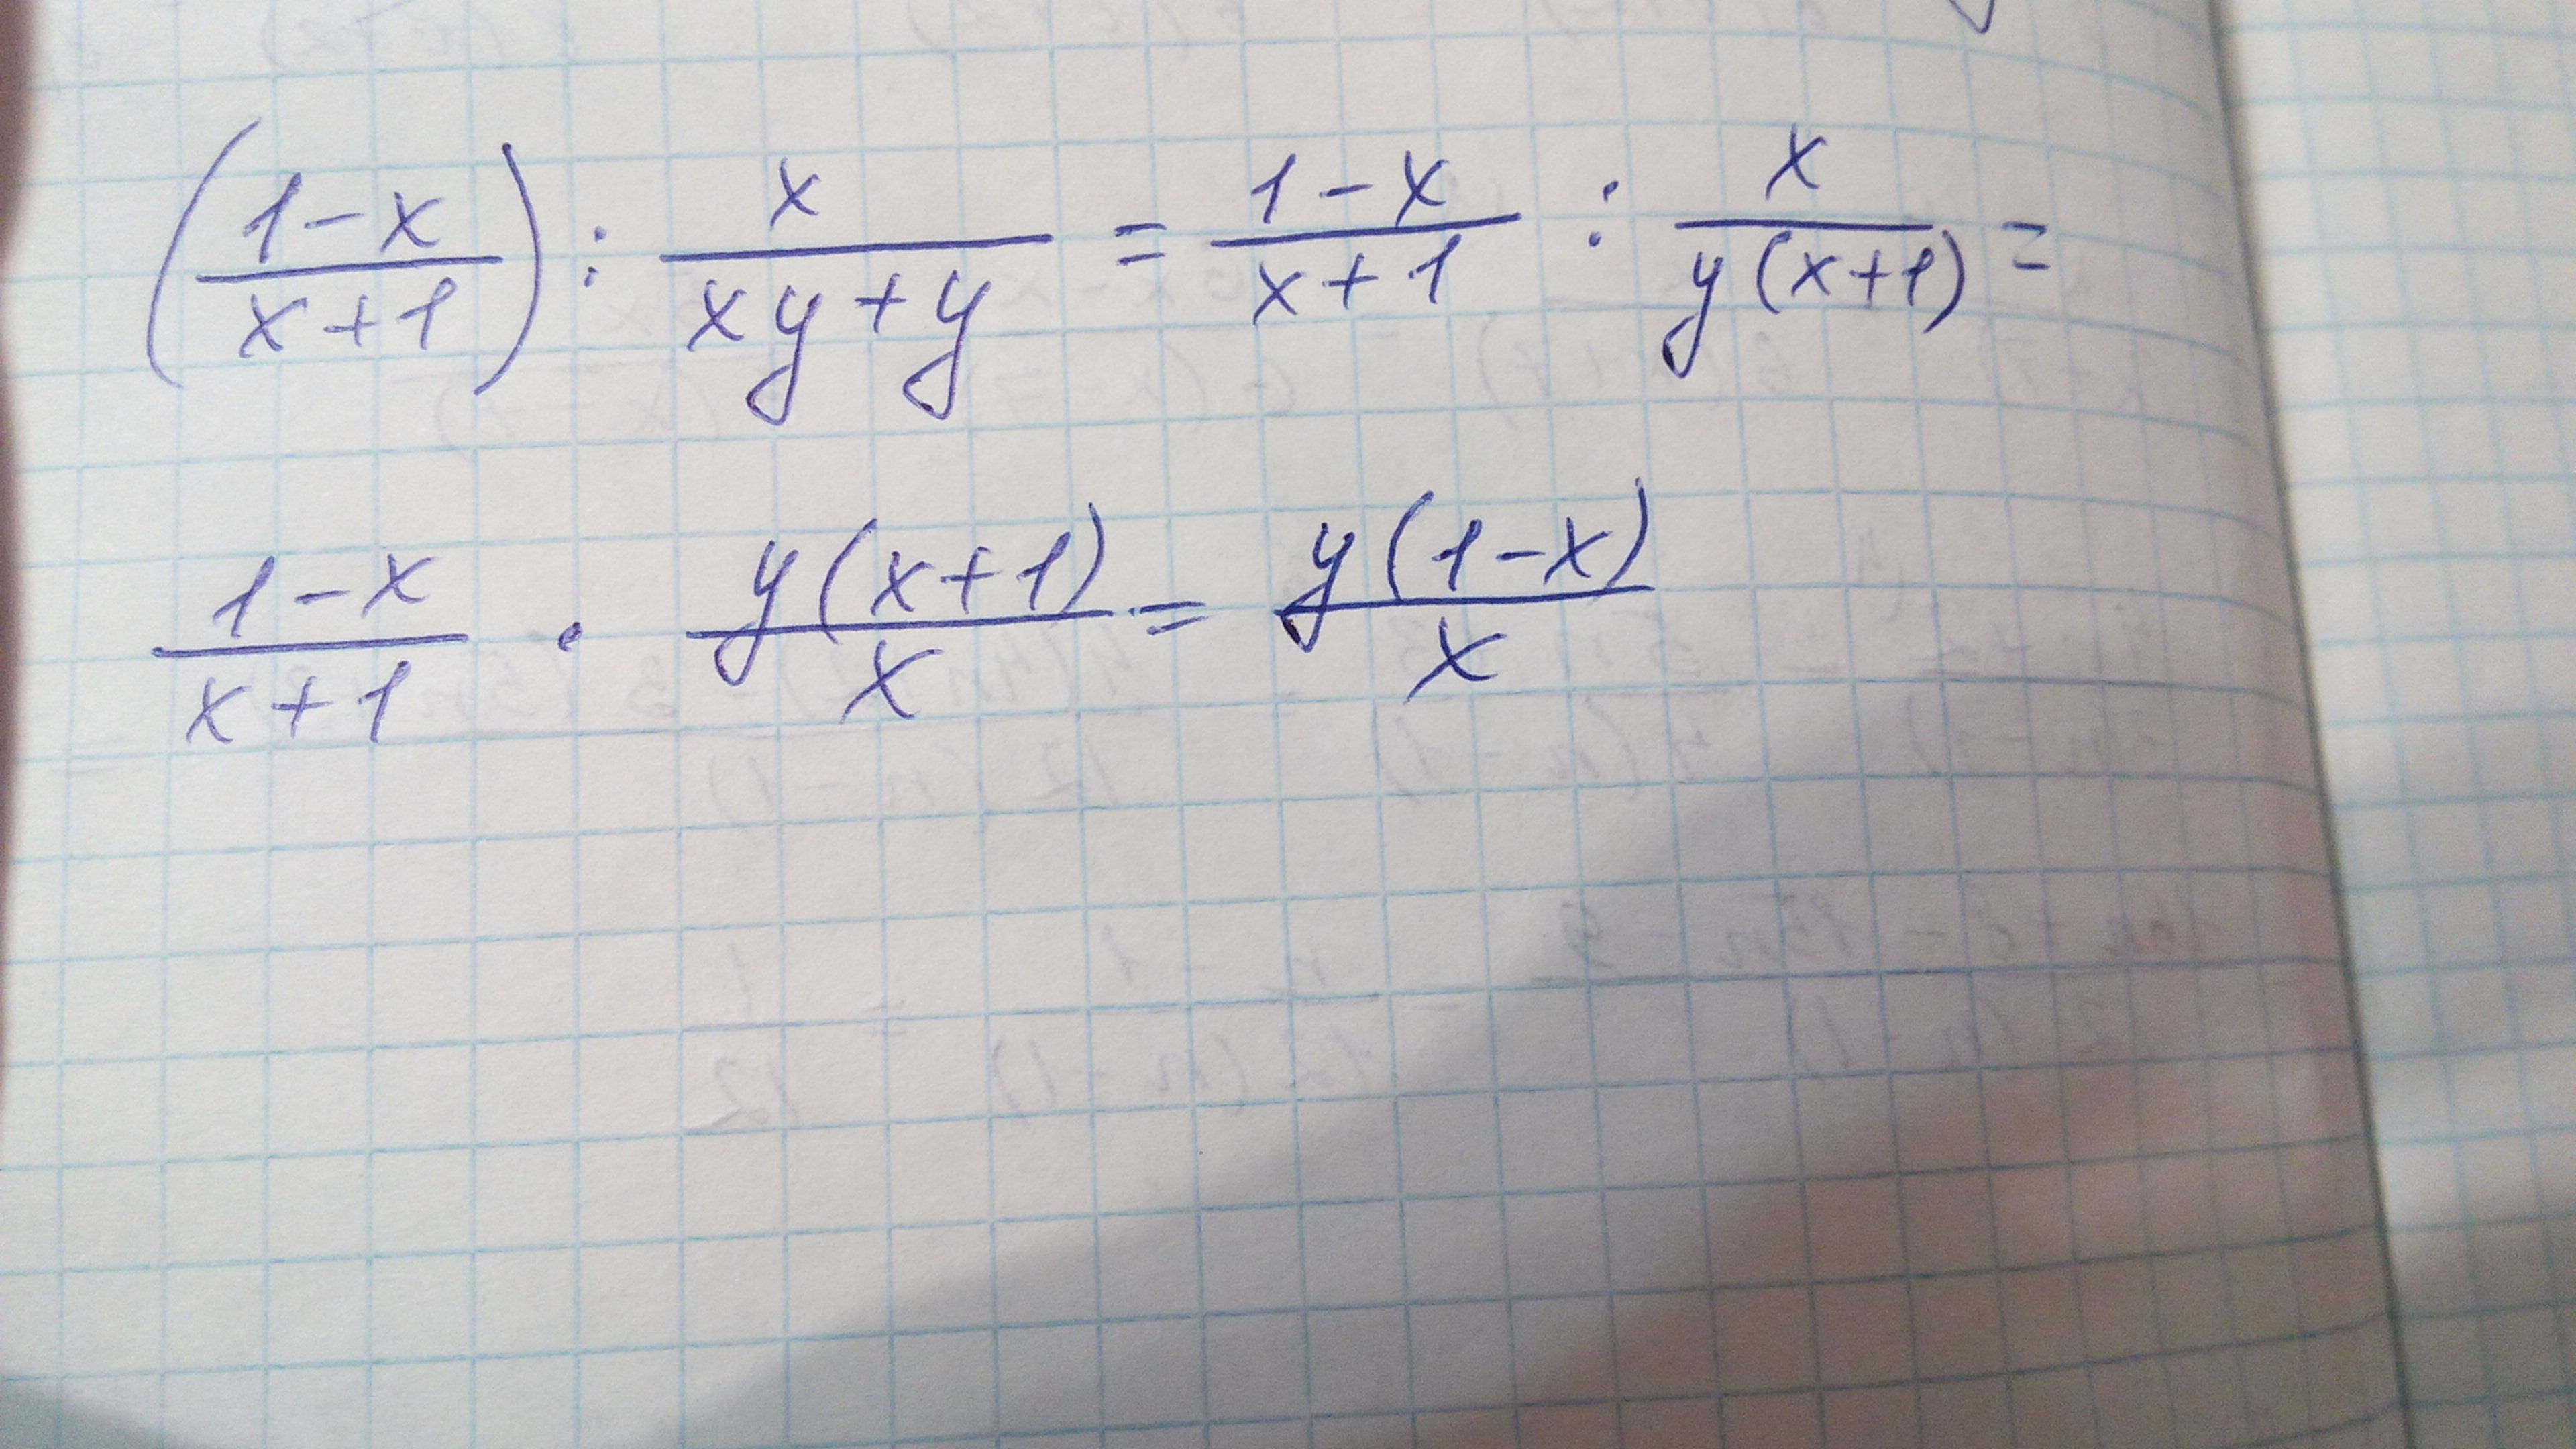 Бутан x1 x2. (X-1)(X+1). 1/X^2. 1x1. (X+1)(X+1)(X++1) степень.